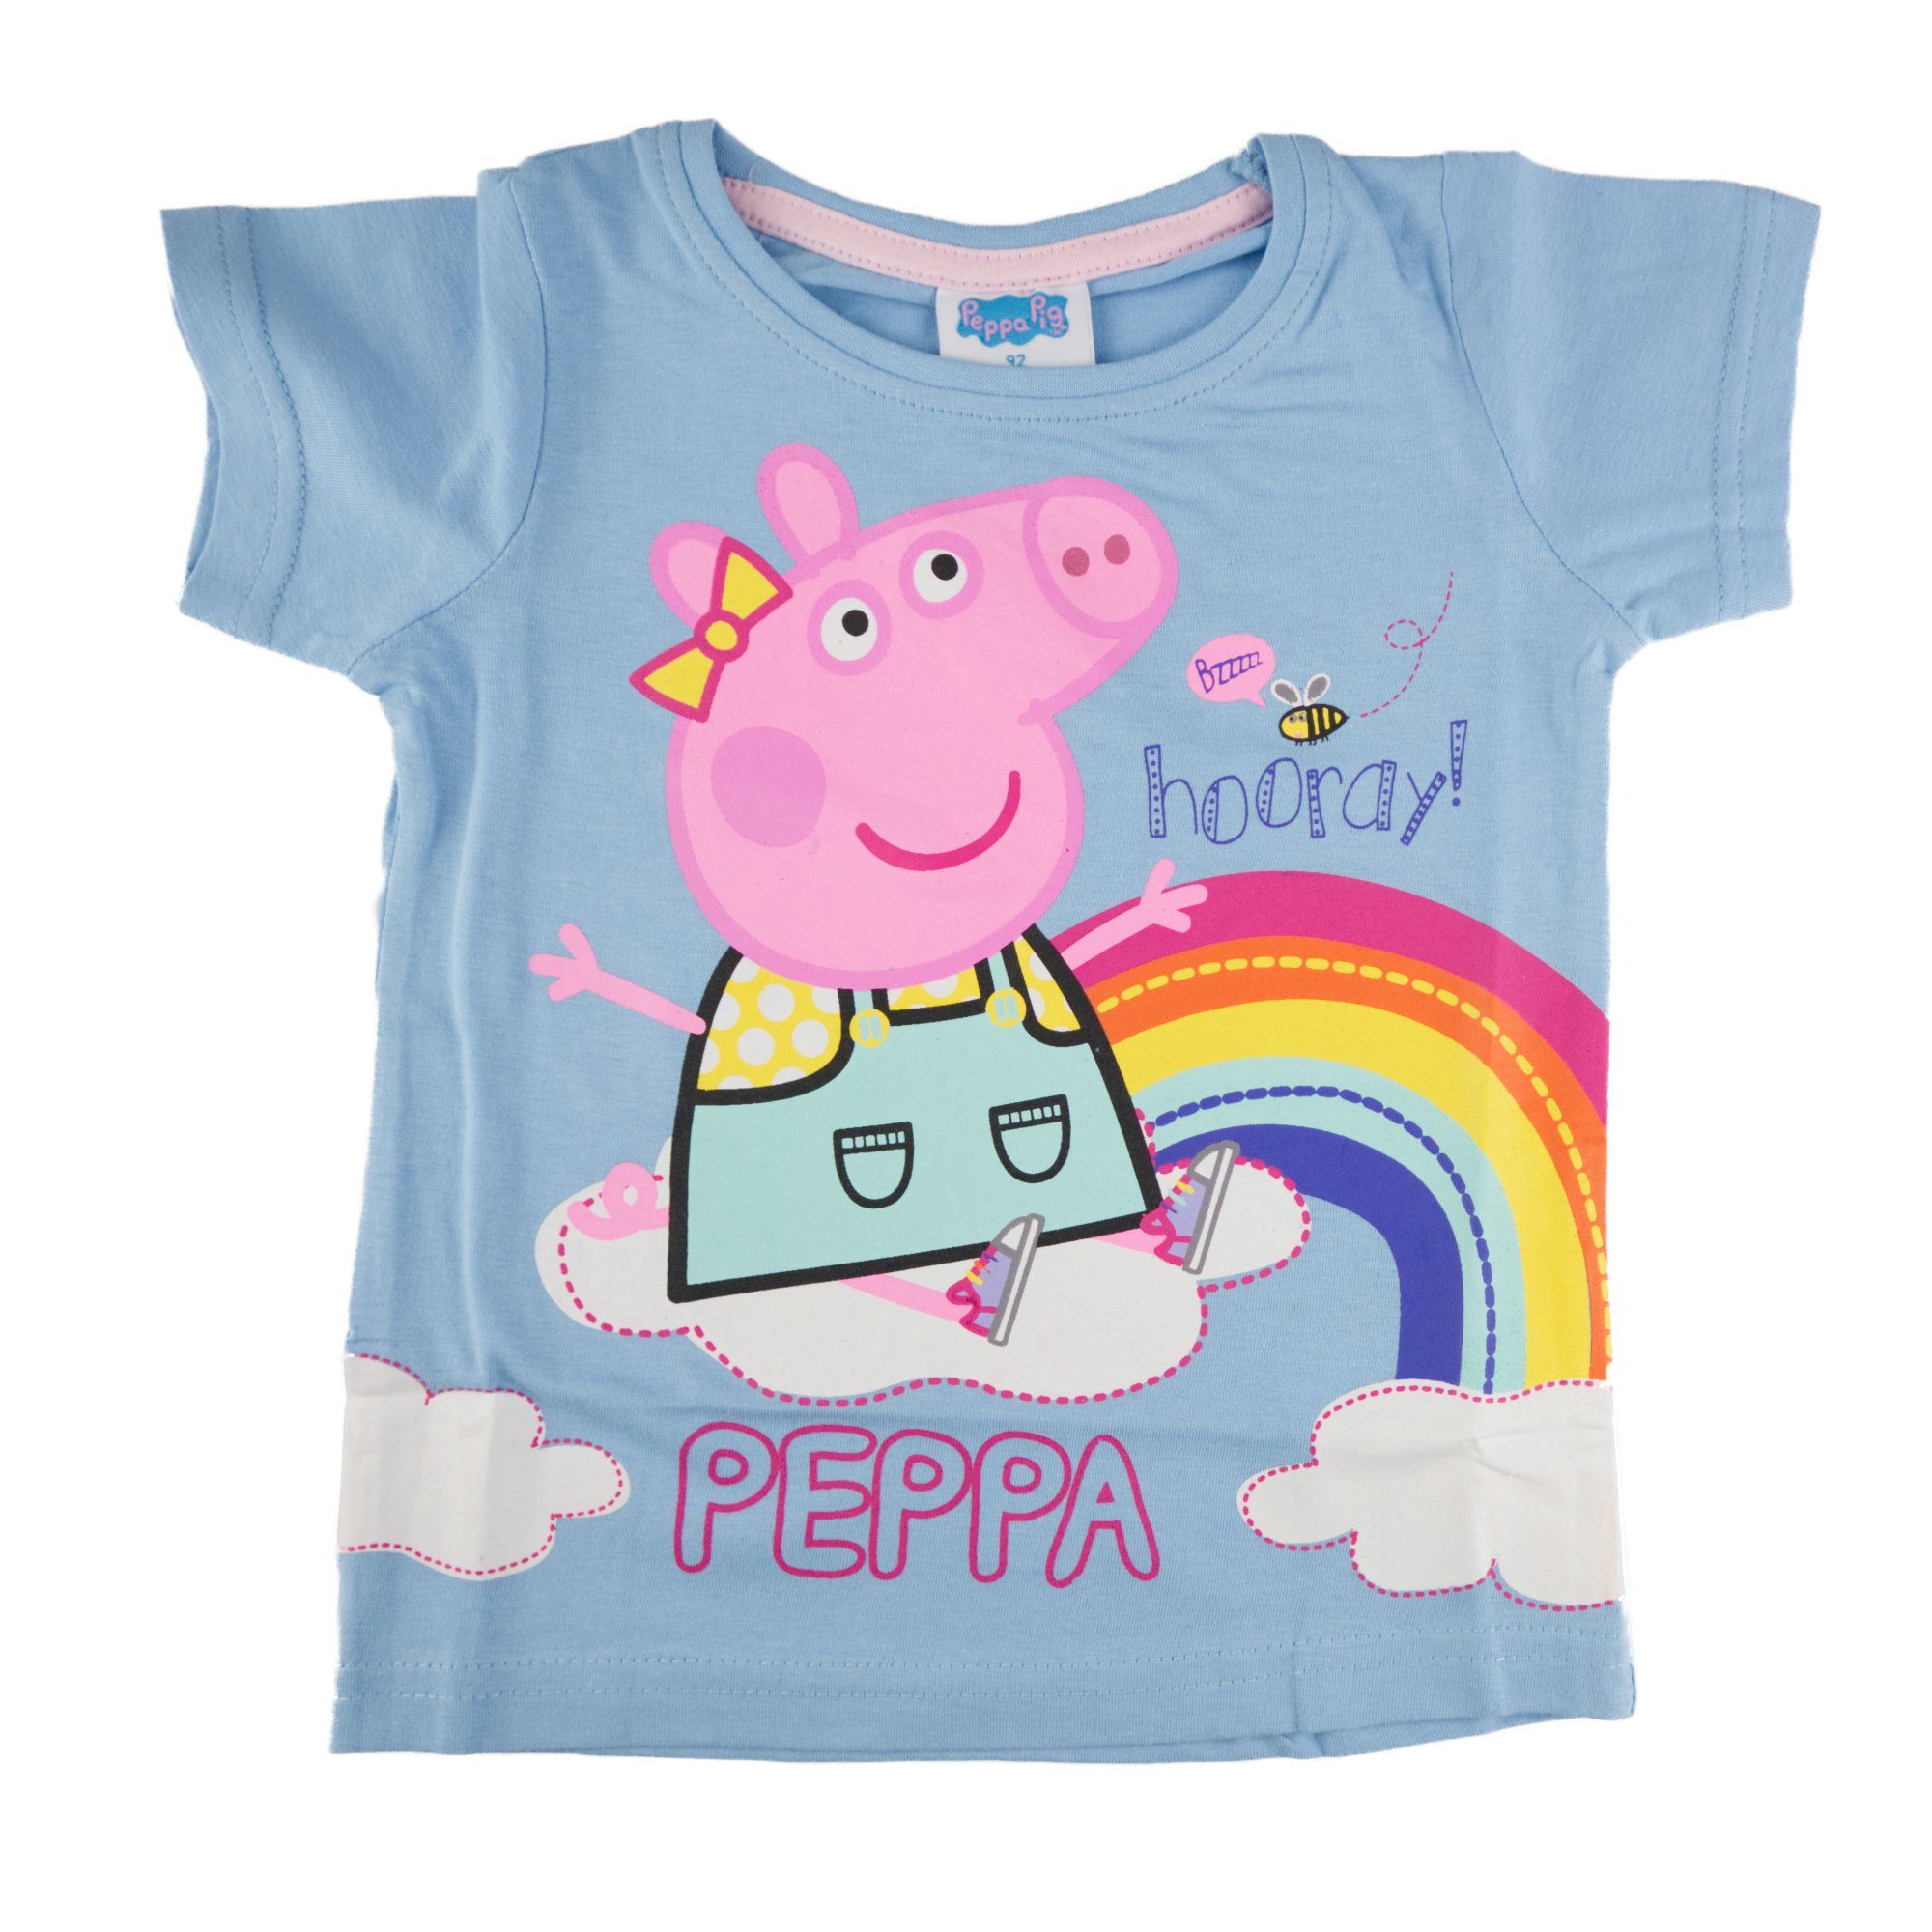 Peppa Pig Print-Shirt Peppa Wutz Kinder T-Shirt Gr. 92 bis 116, 100% Baumwolle Blau